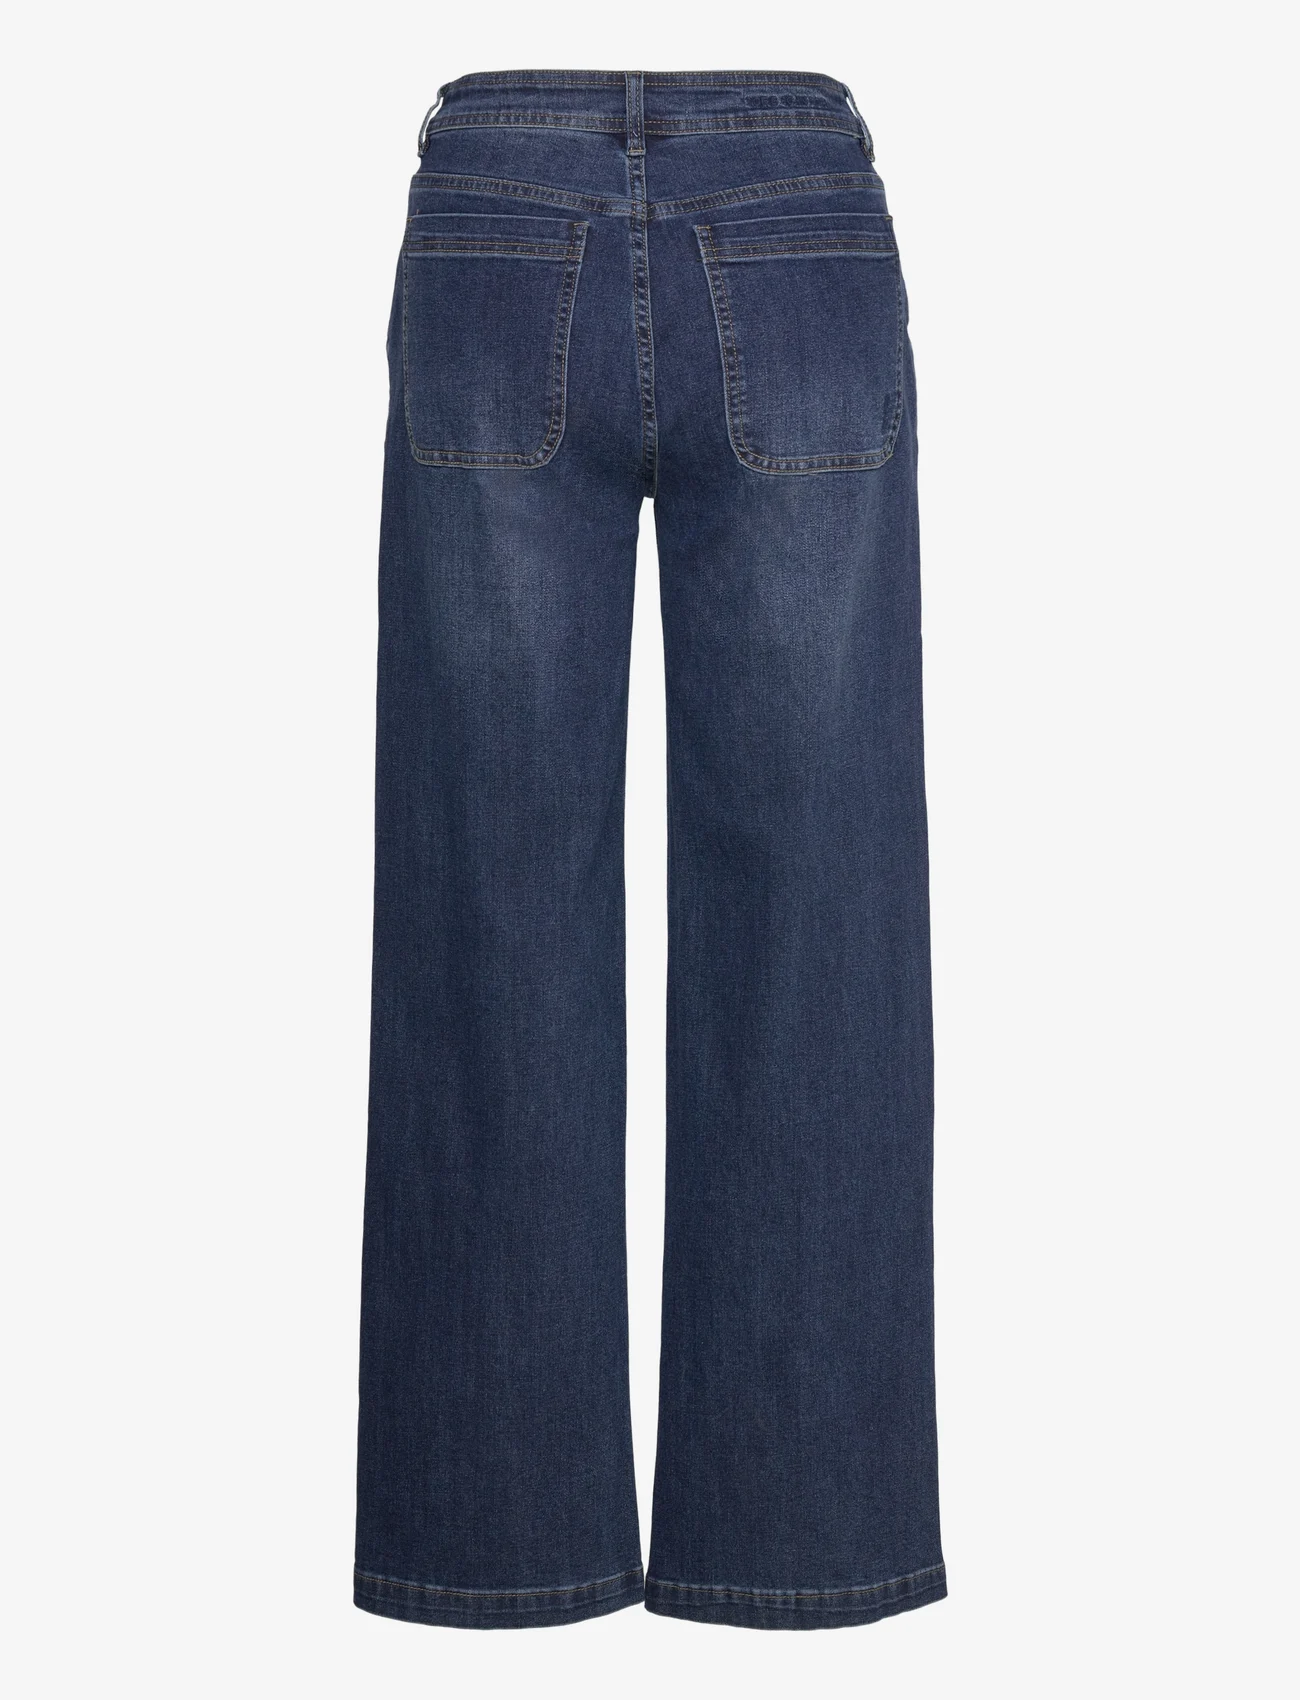 Sofie Schnoor - Jeans - vide bukser - dark denim blue - 1